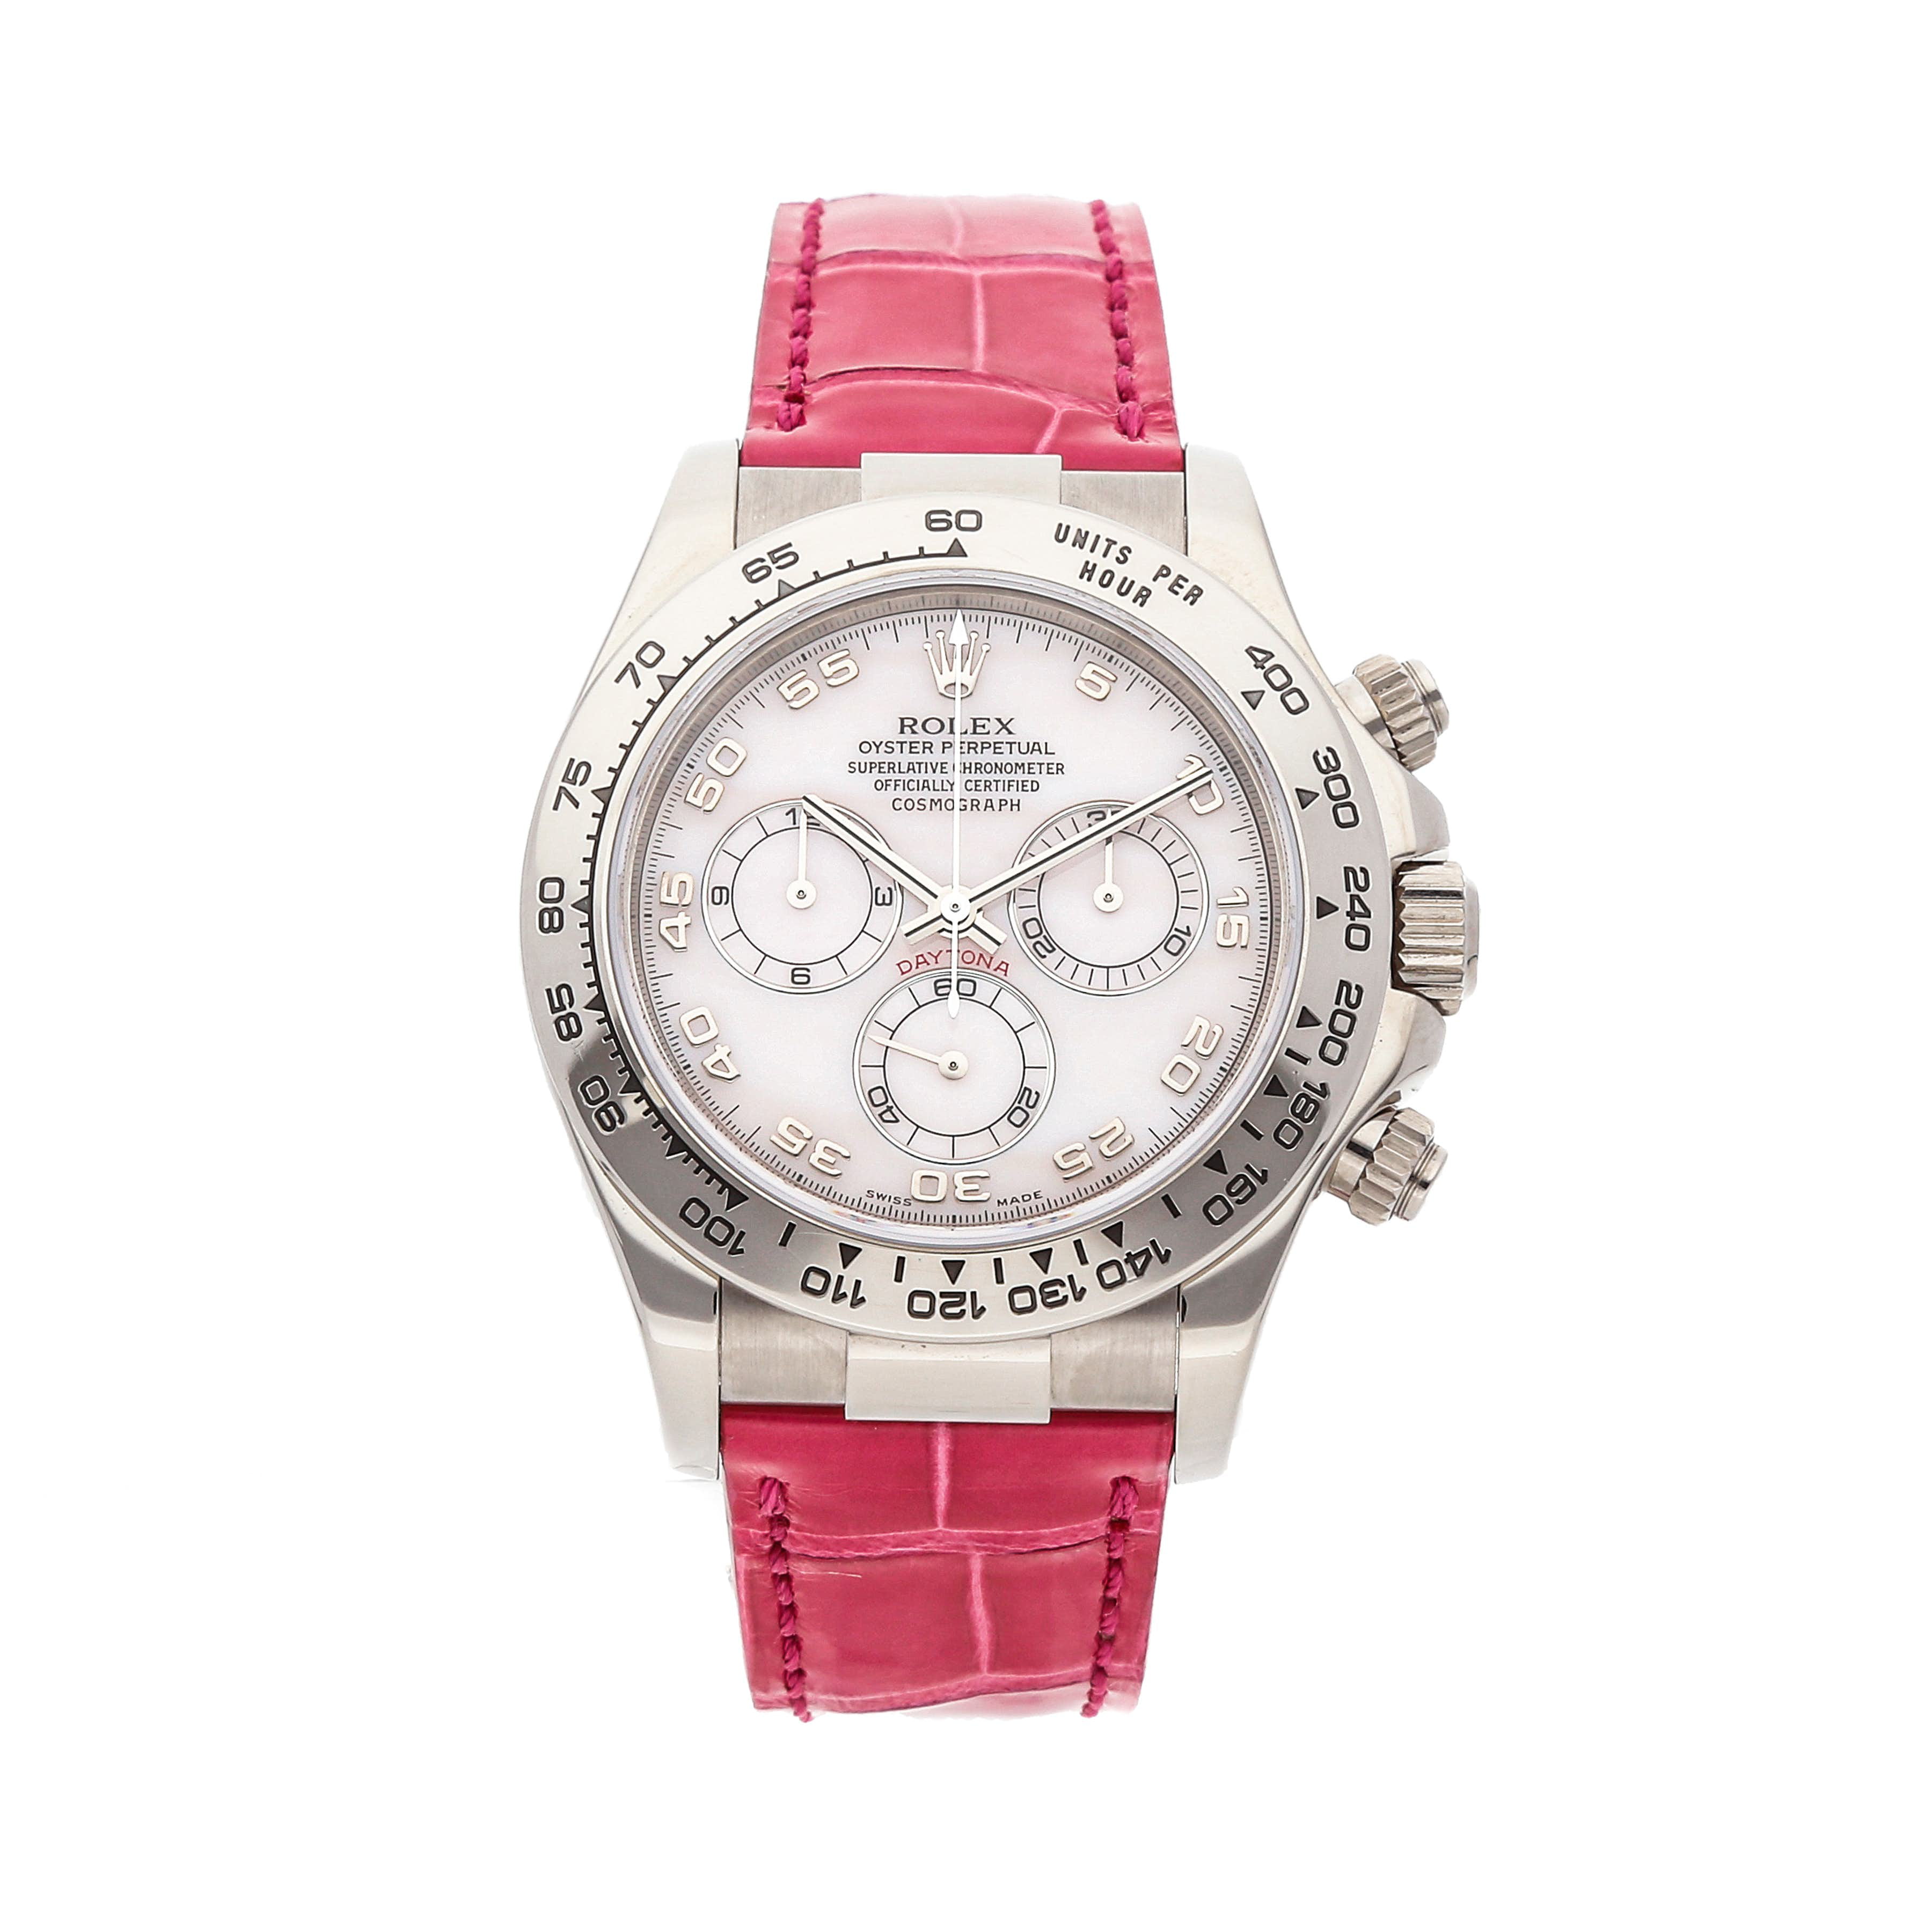 Pre-Owned Rolex Watch Daytona 11651 (15 